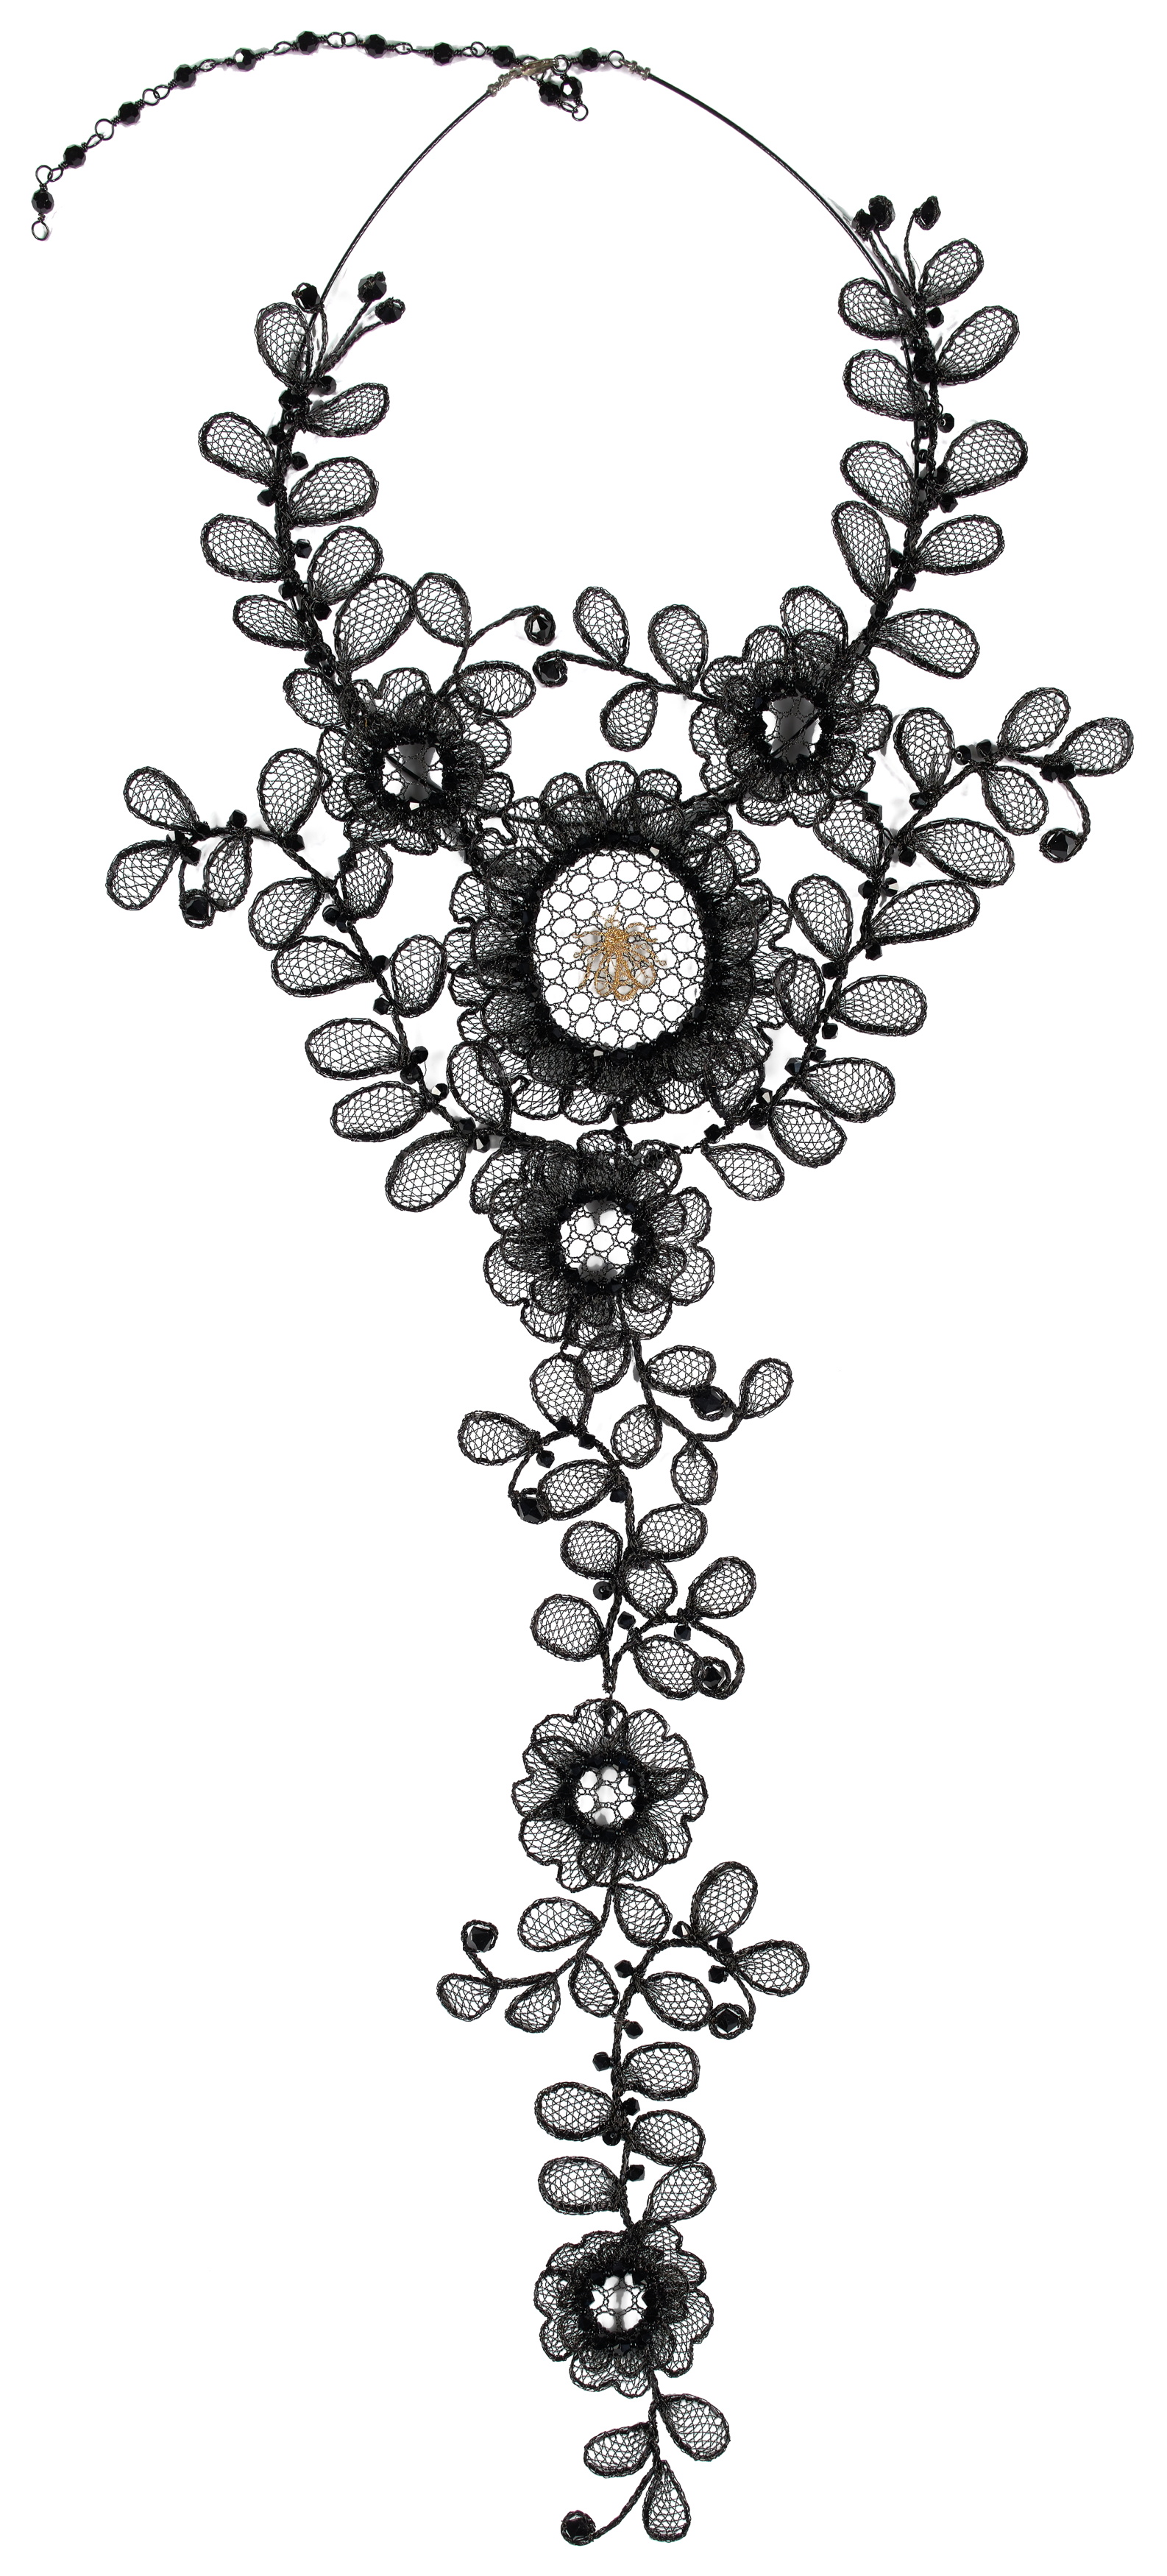 'Chantilly necklace' by Lenka Suchanek